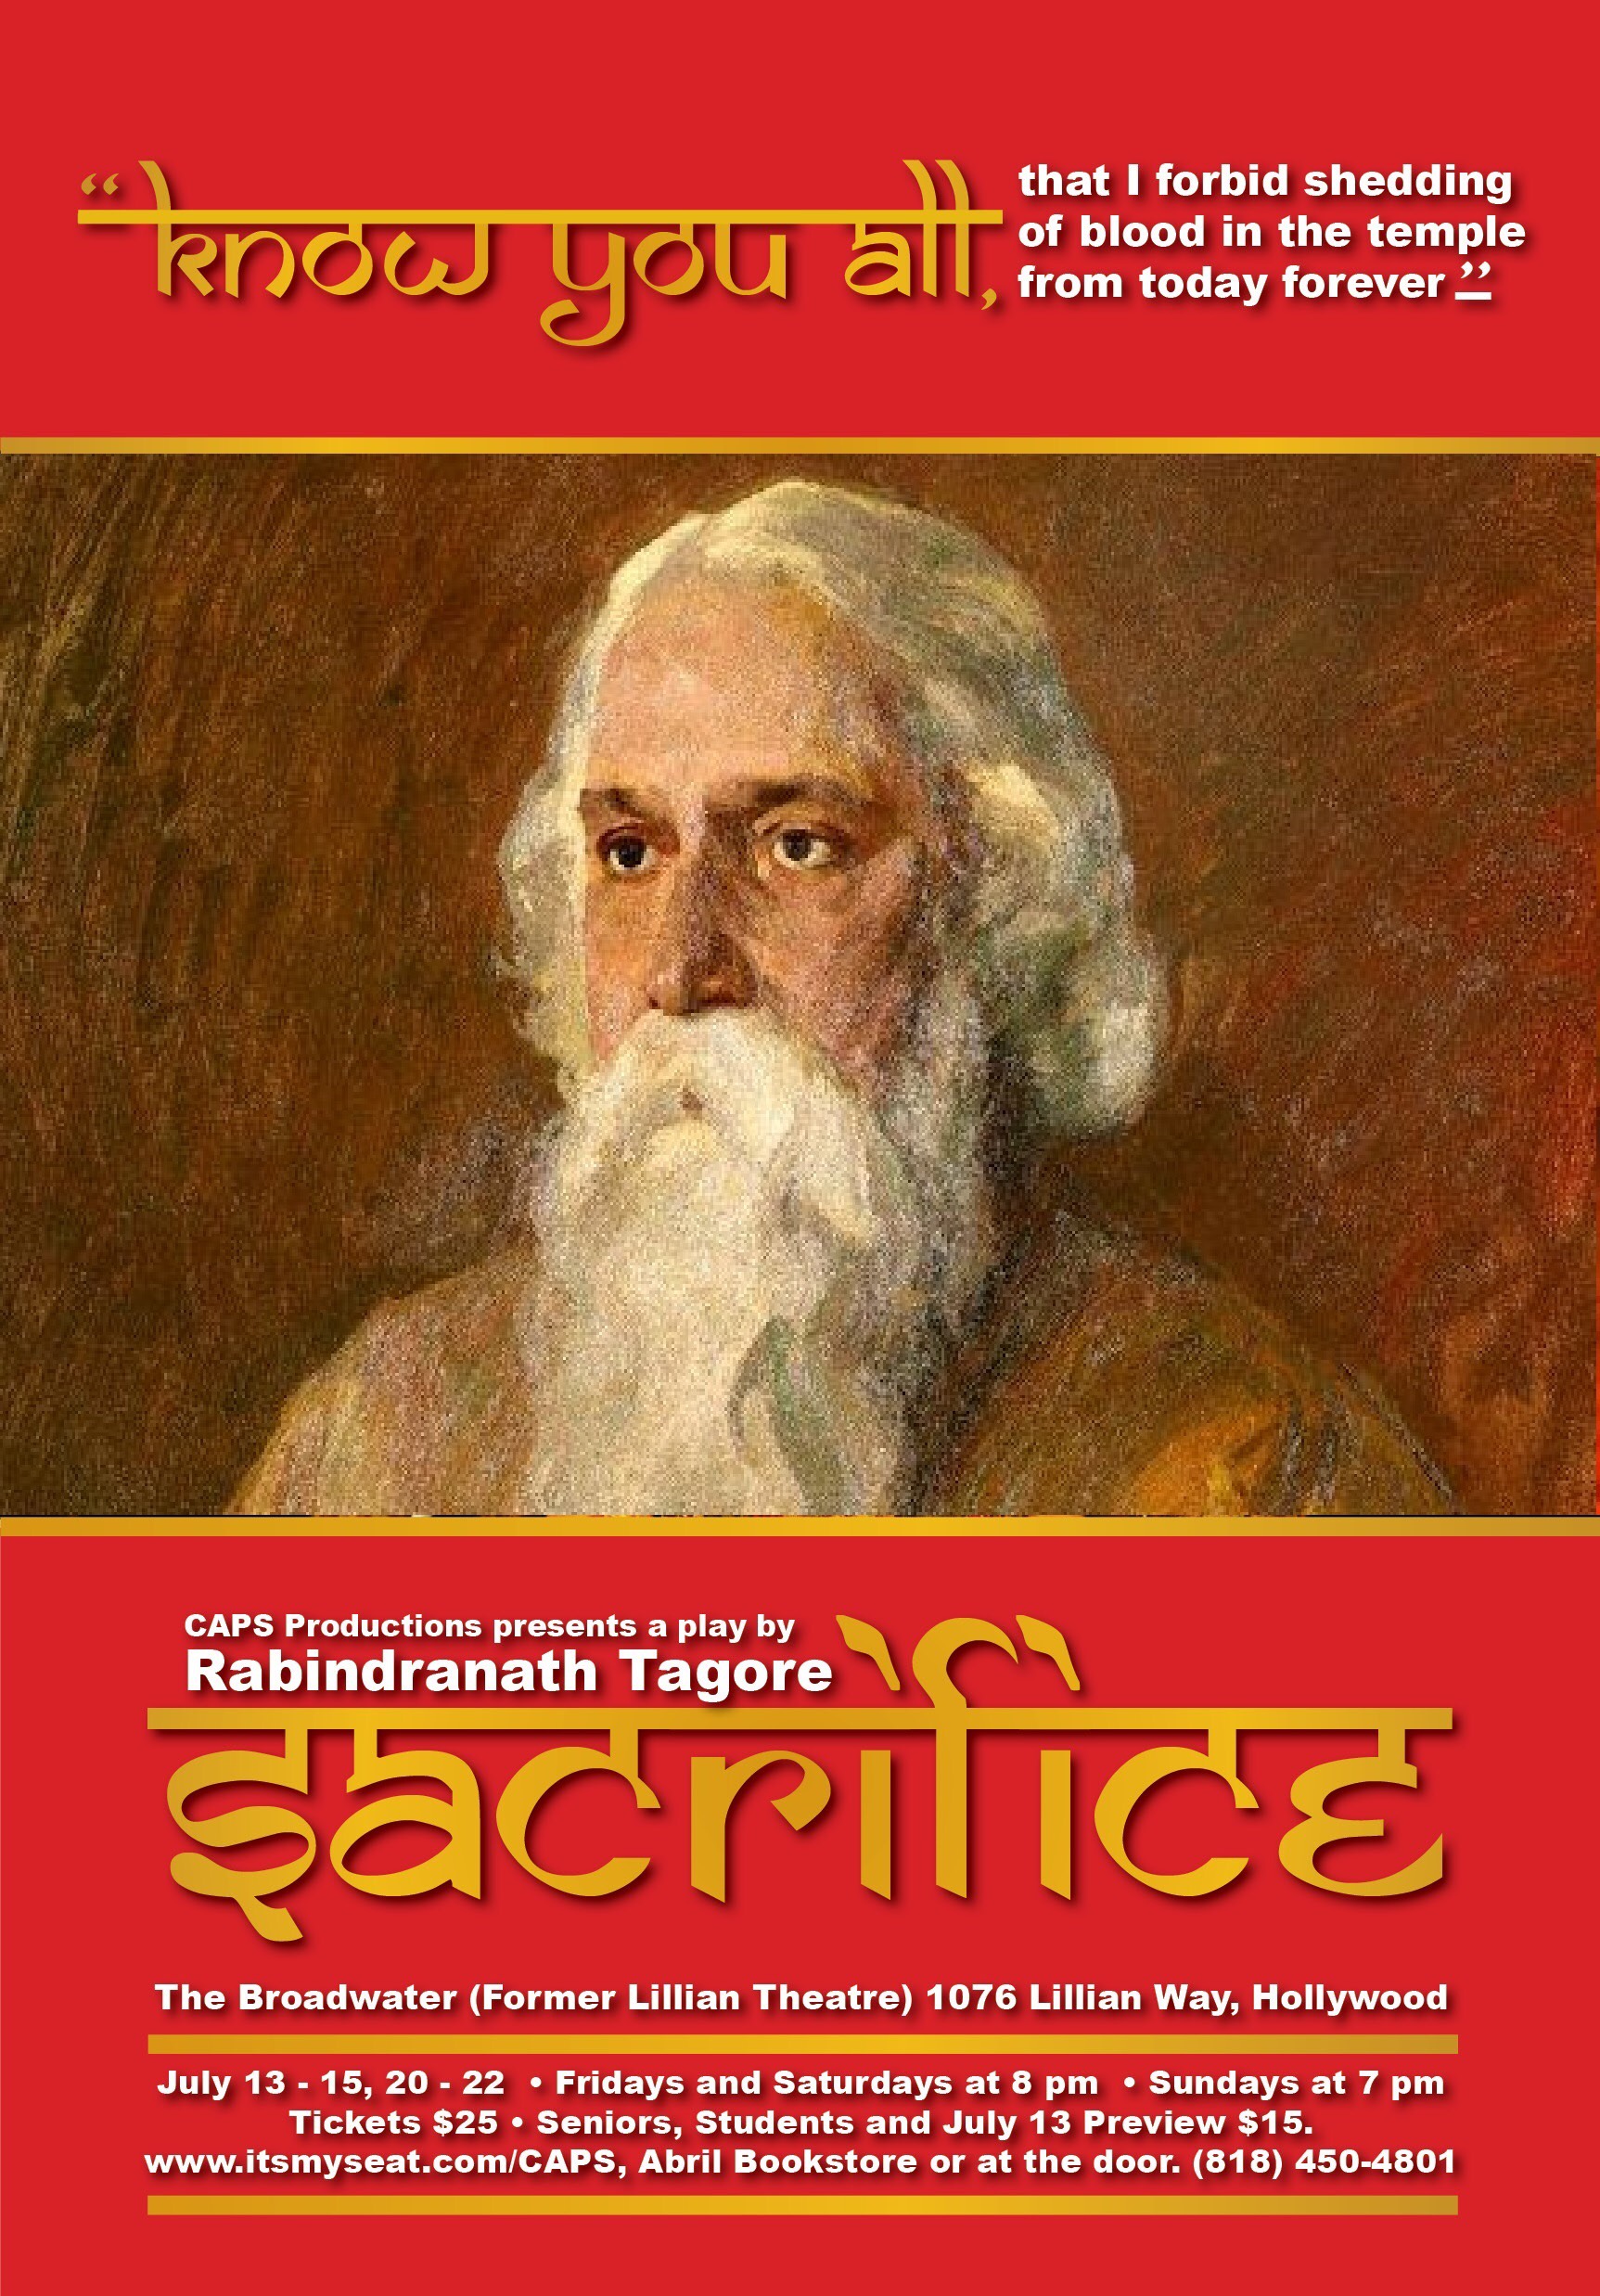 Tagore’s Play: Sacrifice 7/13-15, 7/20-7/22